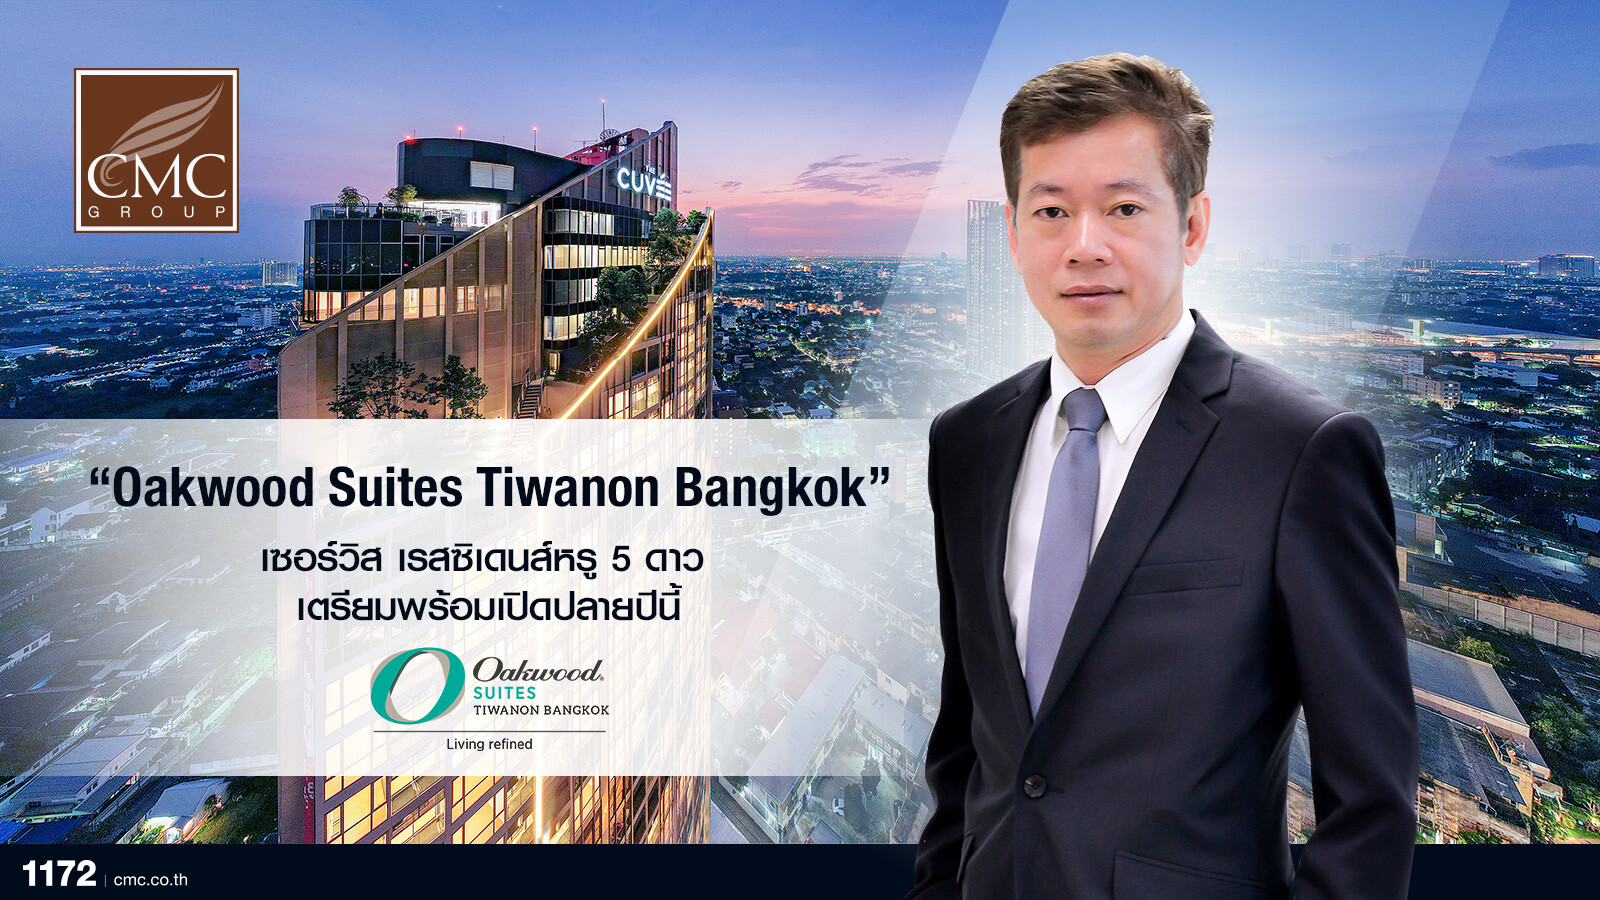 CMC มั่นใจการท่องเที่ยวดีมานด์แน่น เผยทีมบริหาร "Oakwood Suites Tiwanon Bangkok" เซอร์วิส เรสซิเดนส์หรู 5 ดาว เตรียมพร้อมเปิดอย่างเป็นทางการปลายปีนี้